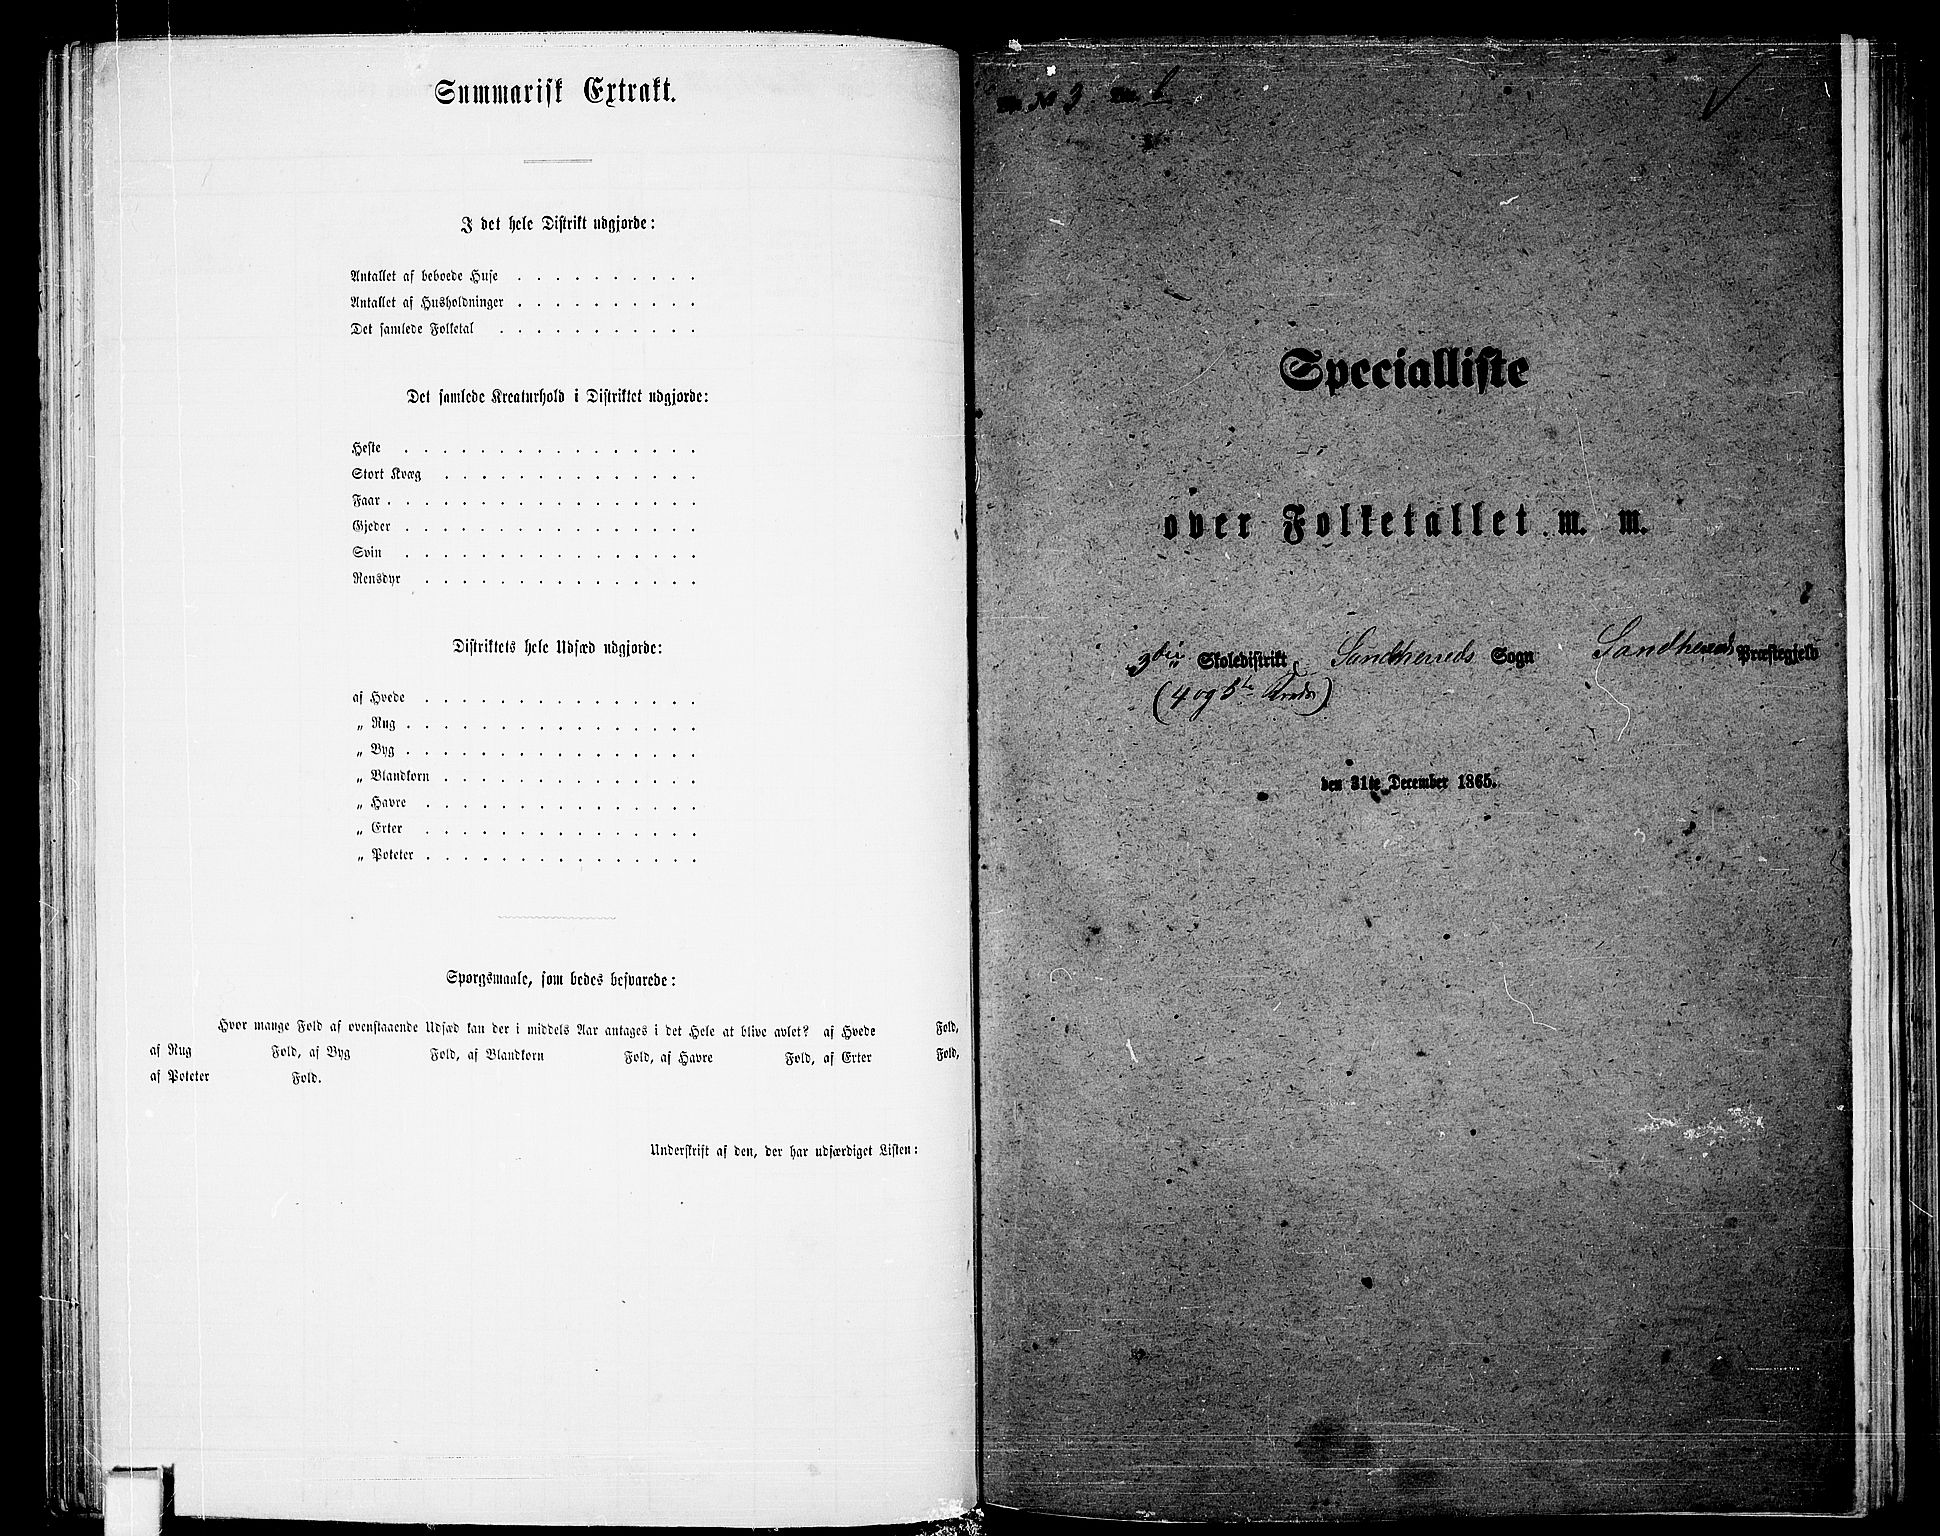 RA, Folketelling 1865 for 0724L Sandeherred prestegjeld, Sandeherred sokn, 1865, s. 87